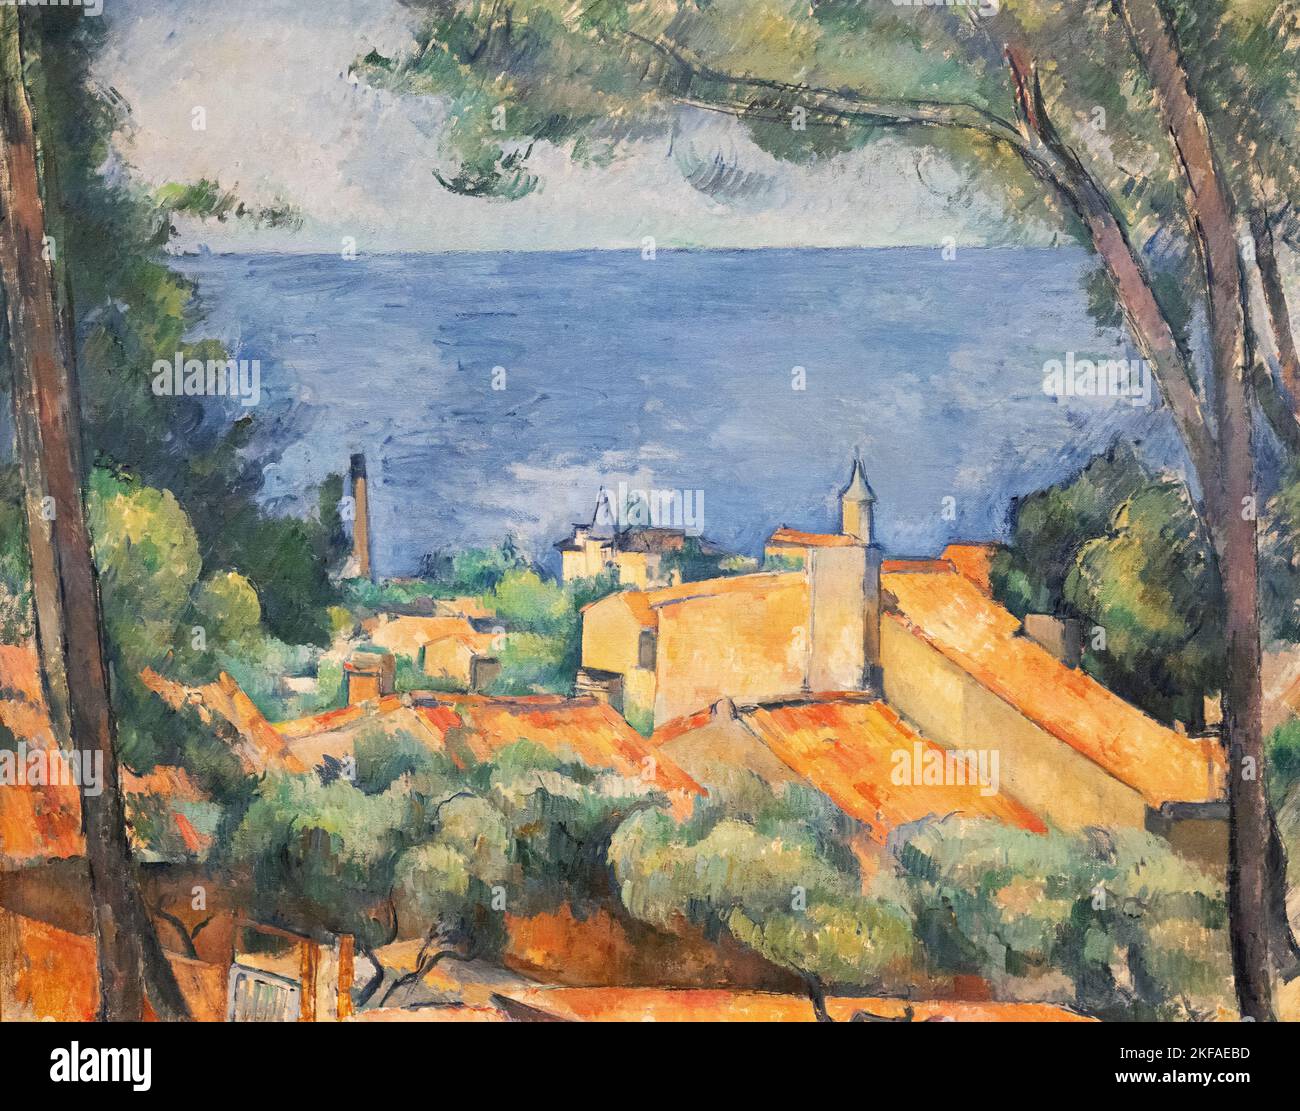 Paul Cezanne Malerei; L'Estaque mit roten Dächern, 1883-5; L'Estaque, Aix-en-provence, Frankreich; Post Impressionismus Landschaftsmalerei, 19. Jahrhundert. Stockfoto